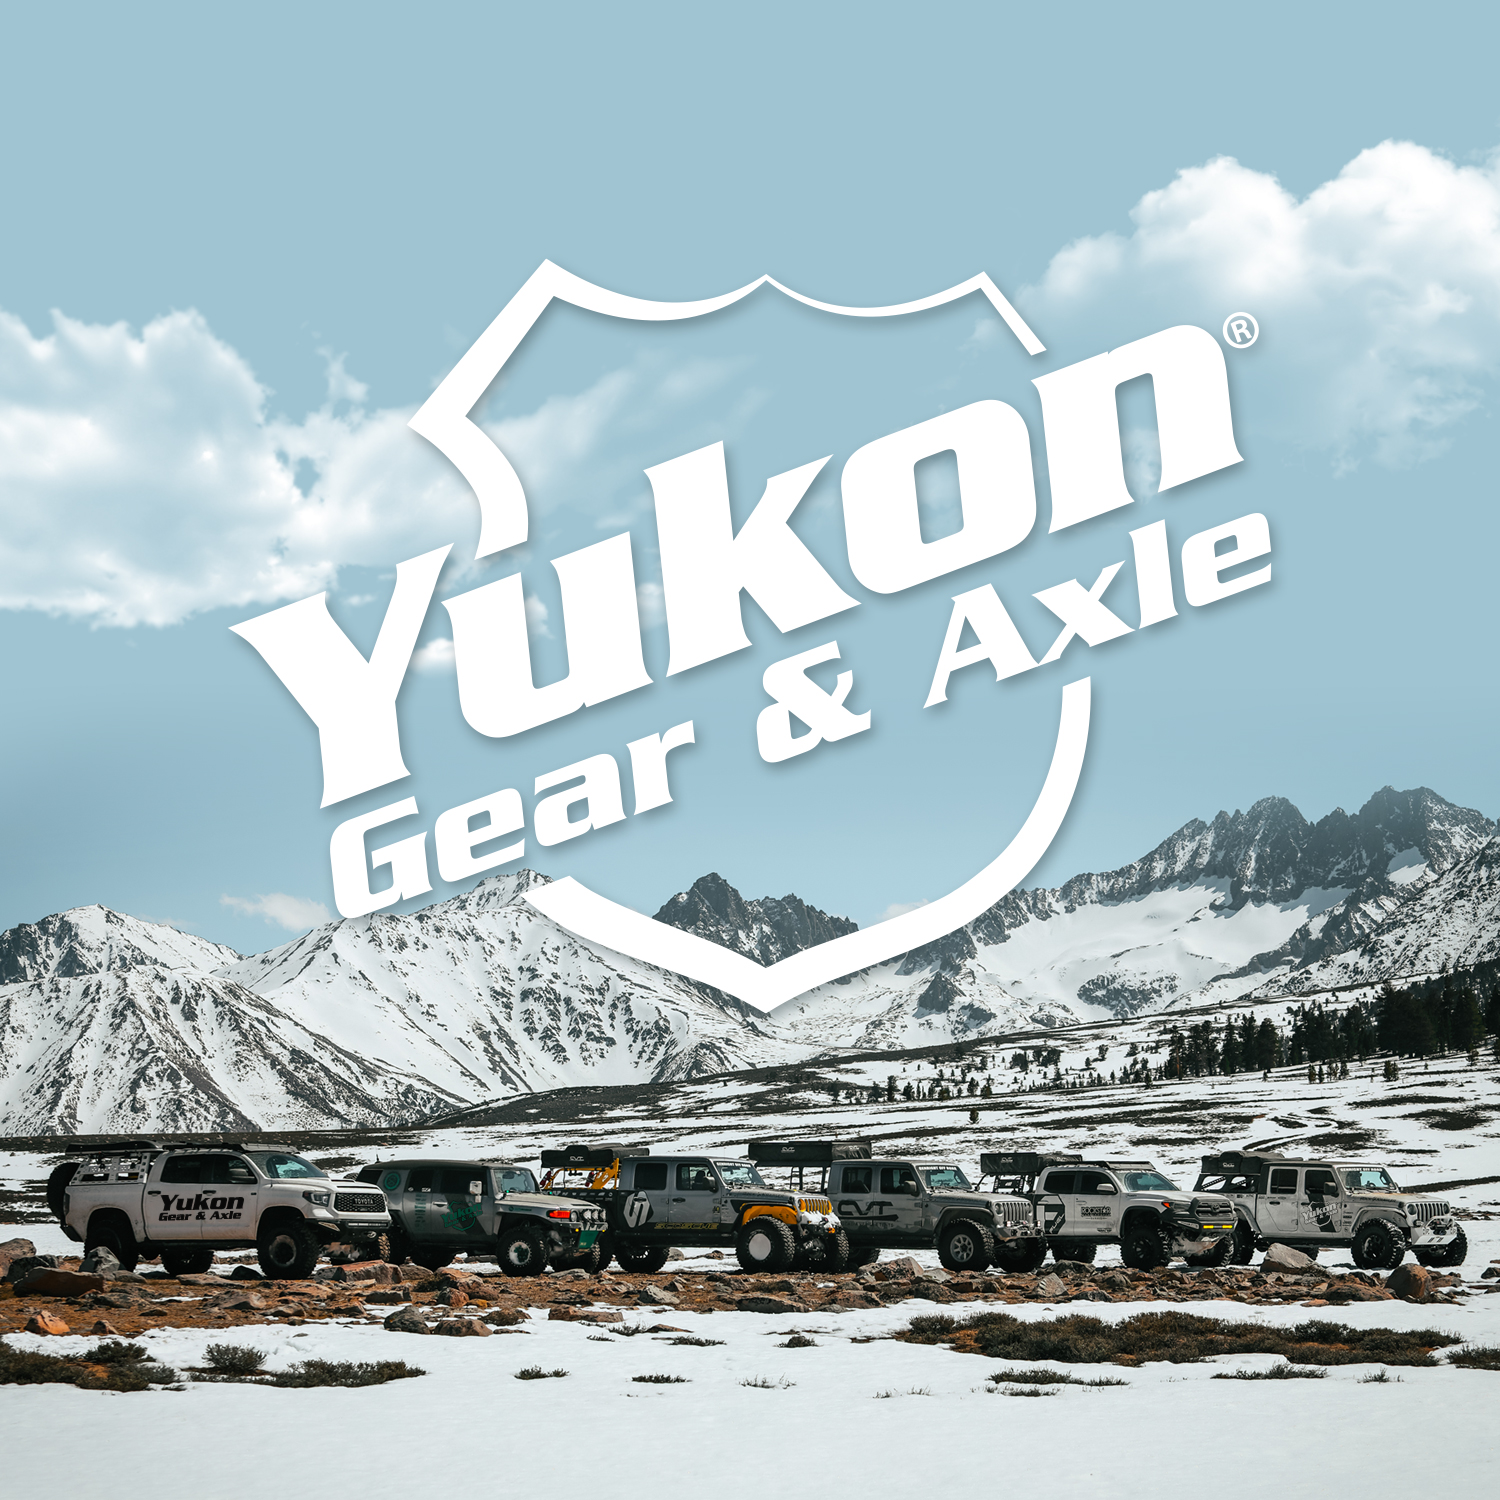 Yukon high performance replacement ring & pinion gear set, Dana 70, 5.13 ratio 